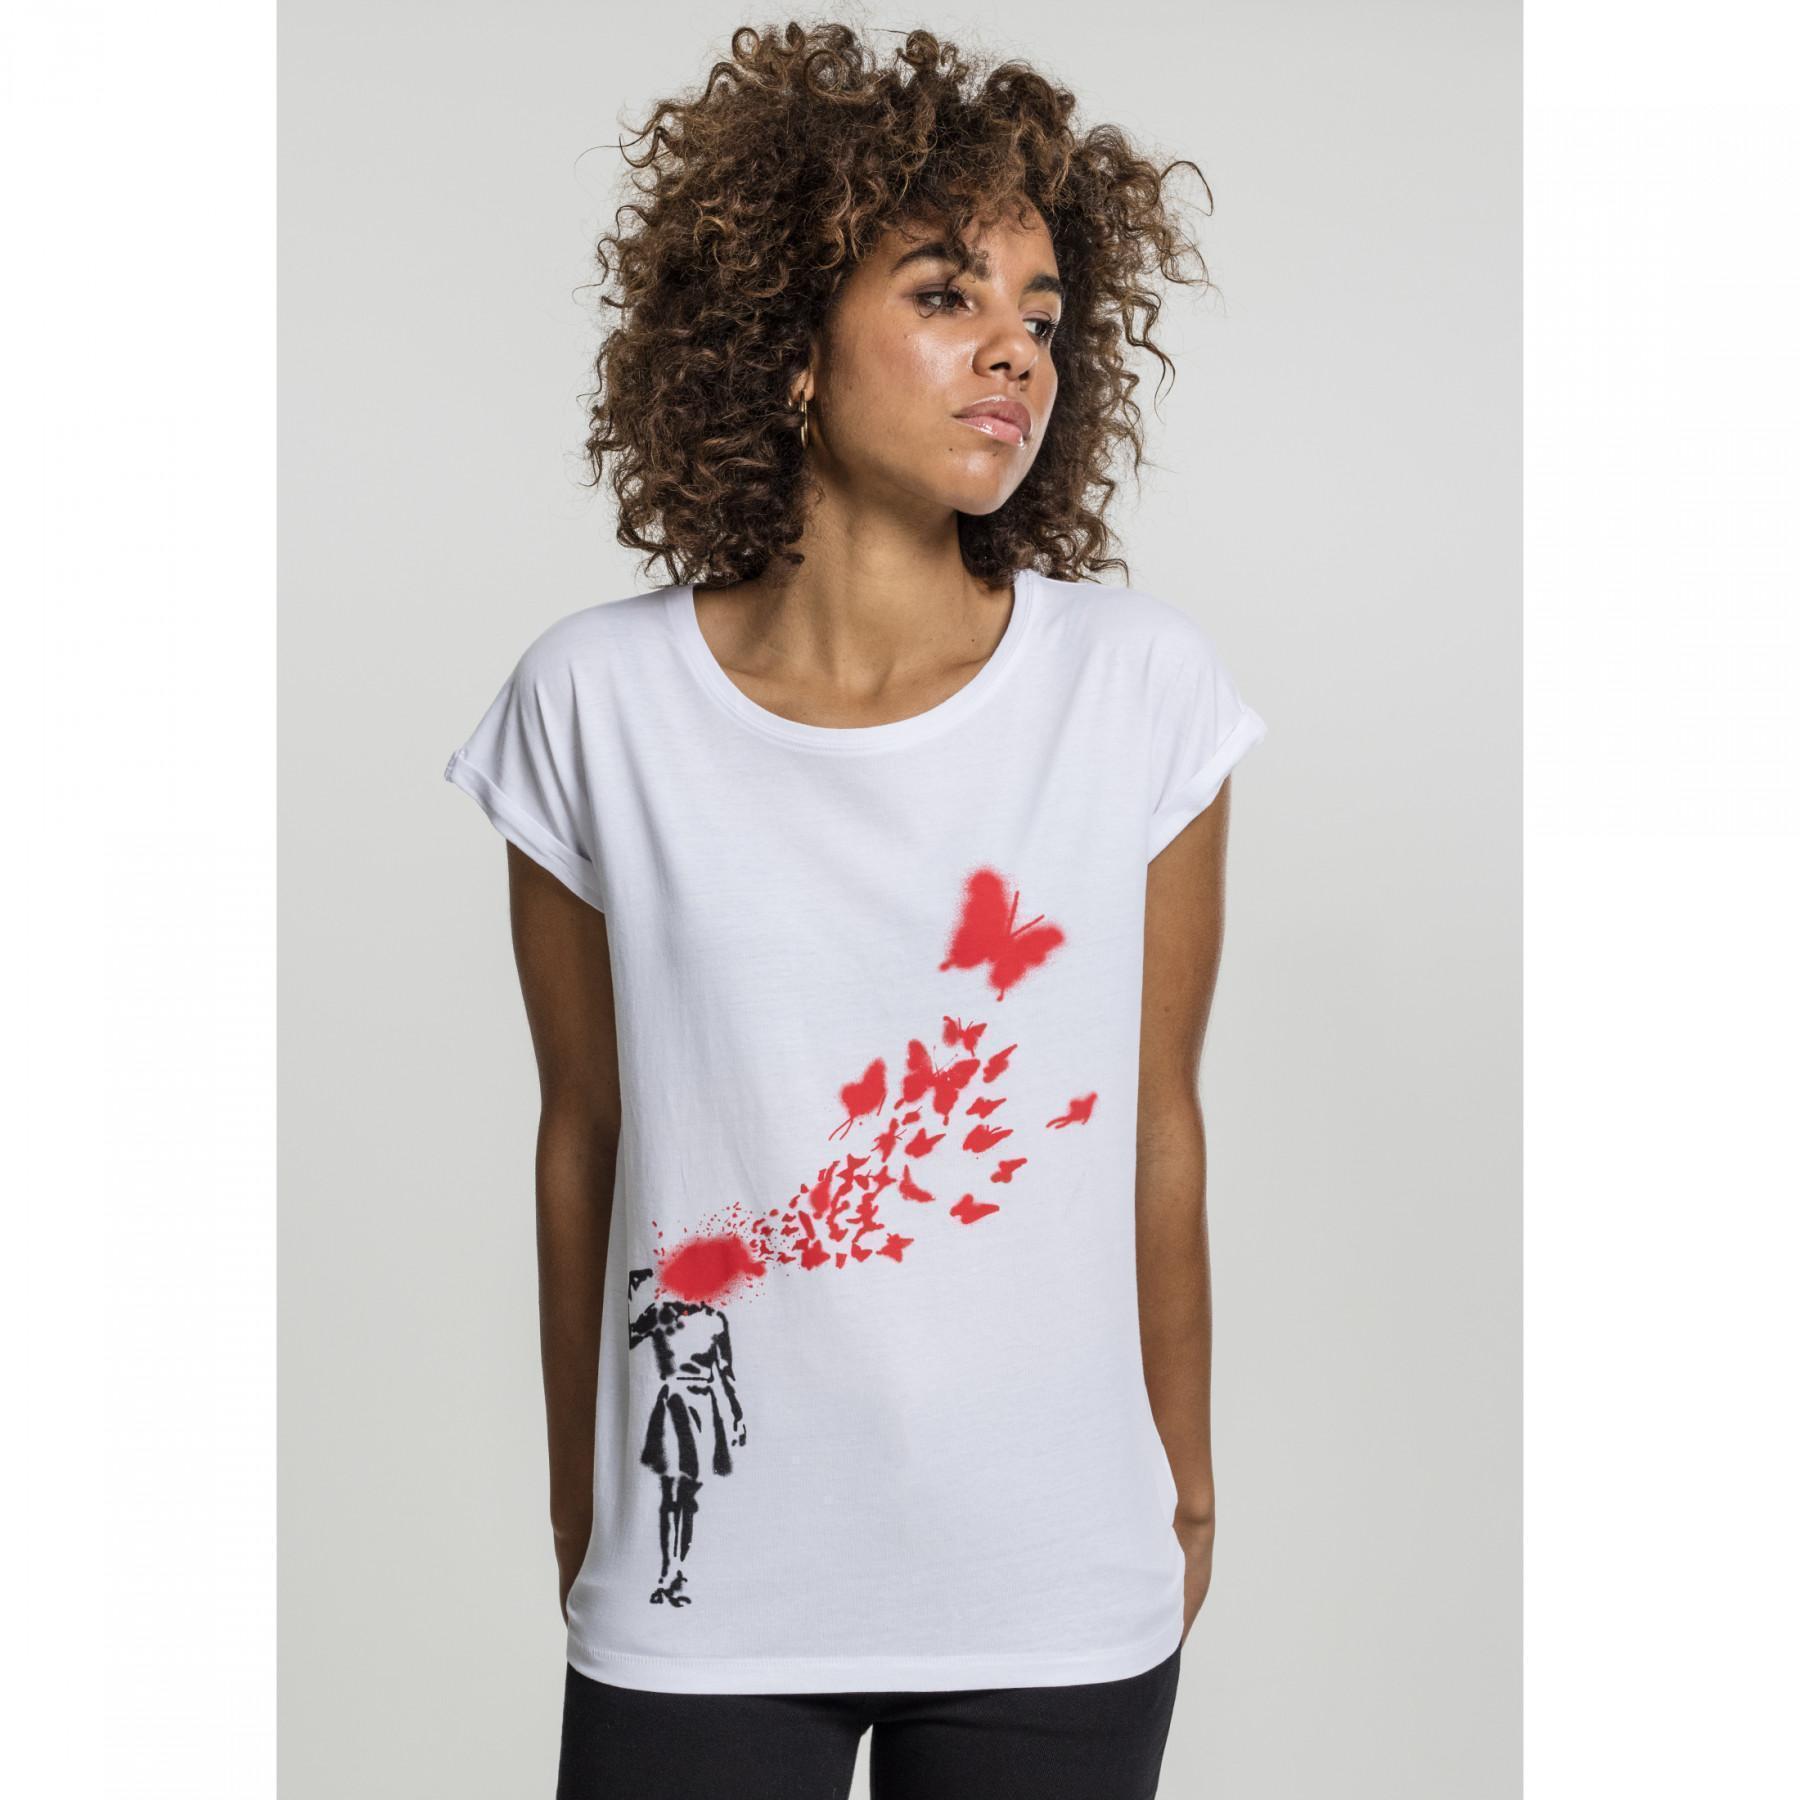 camiseta borboleta clássica urbana banky para mulheres